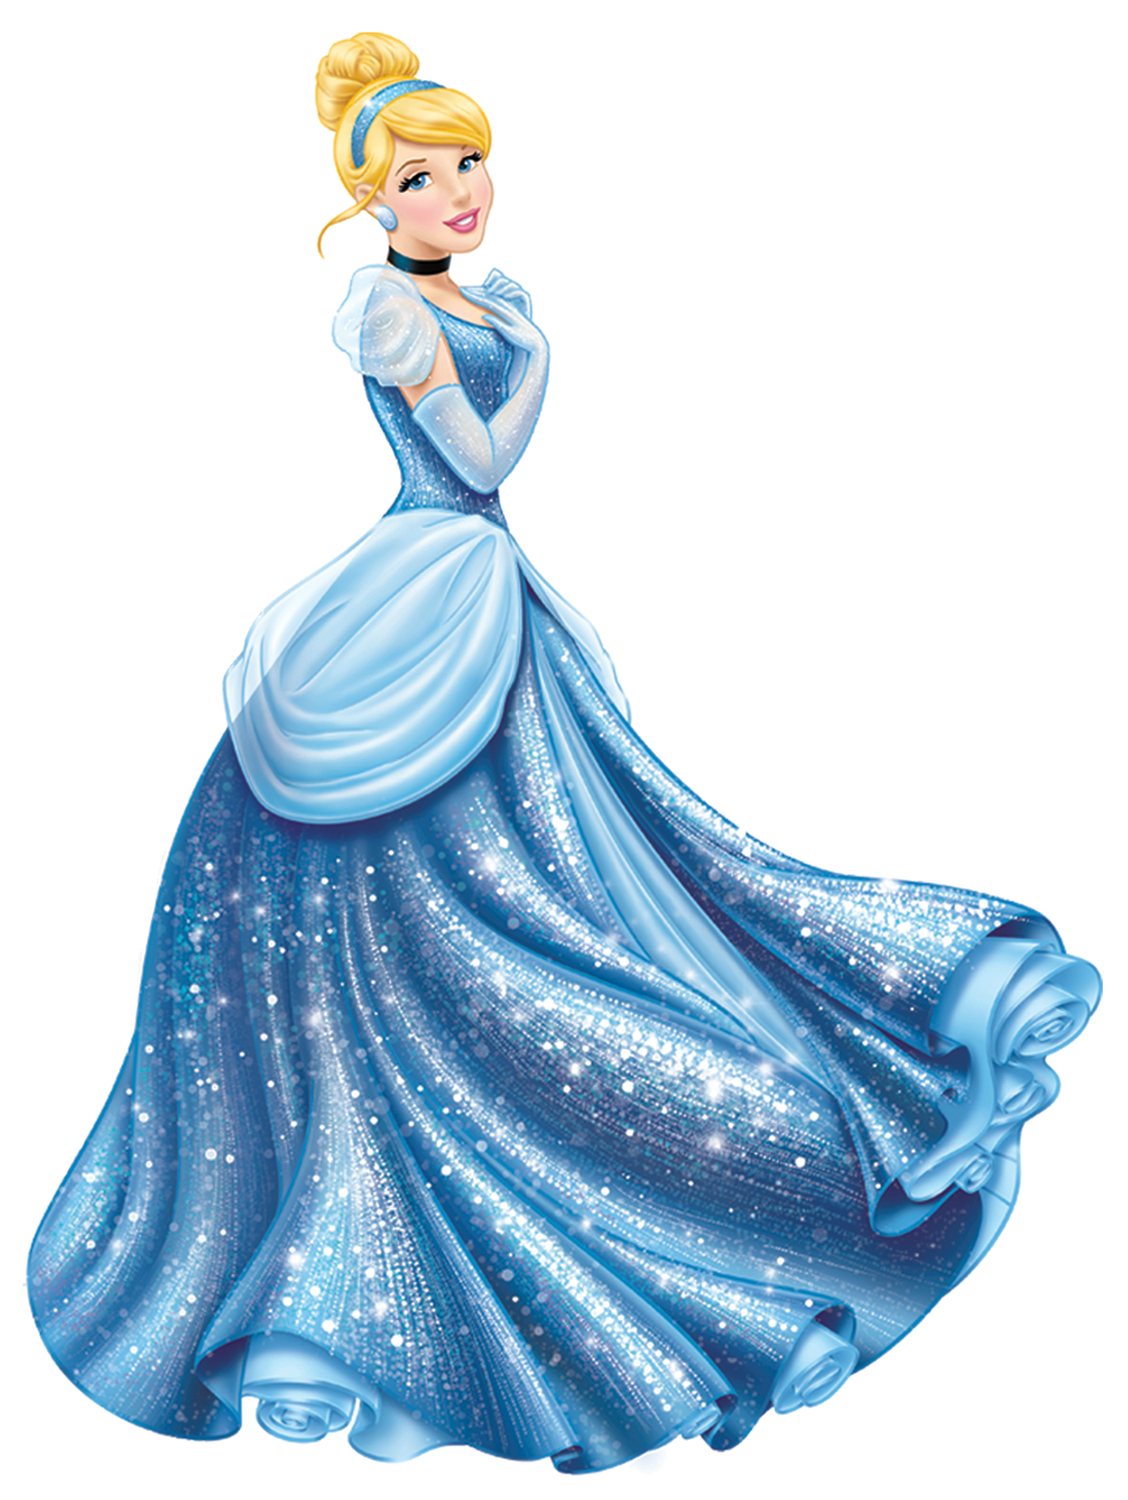 Diamond clipart dress. Disney cinderella pinterest princess